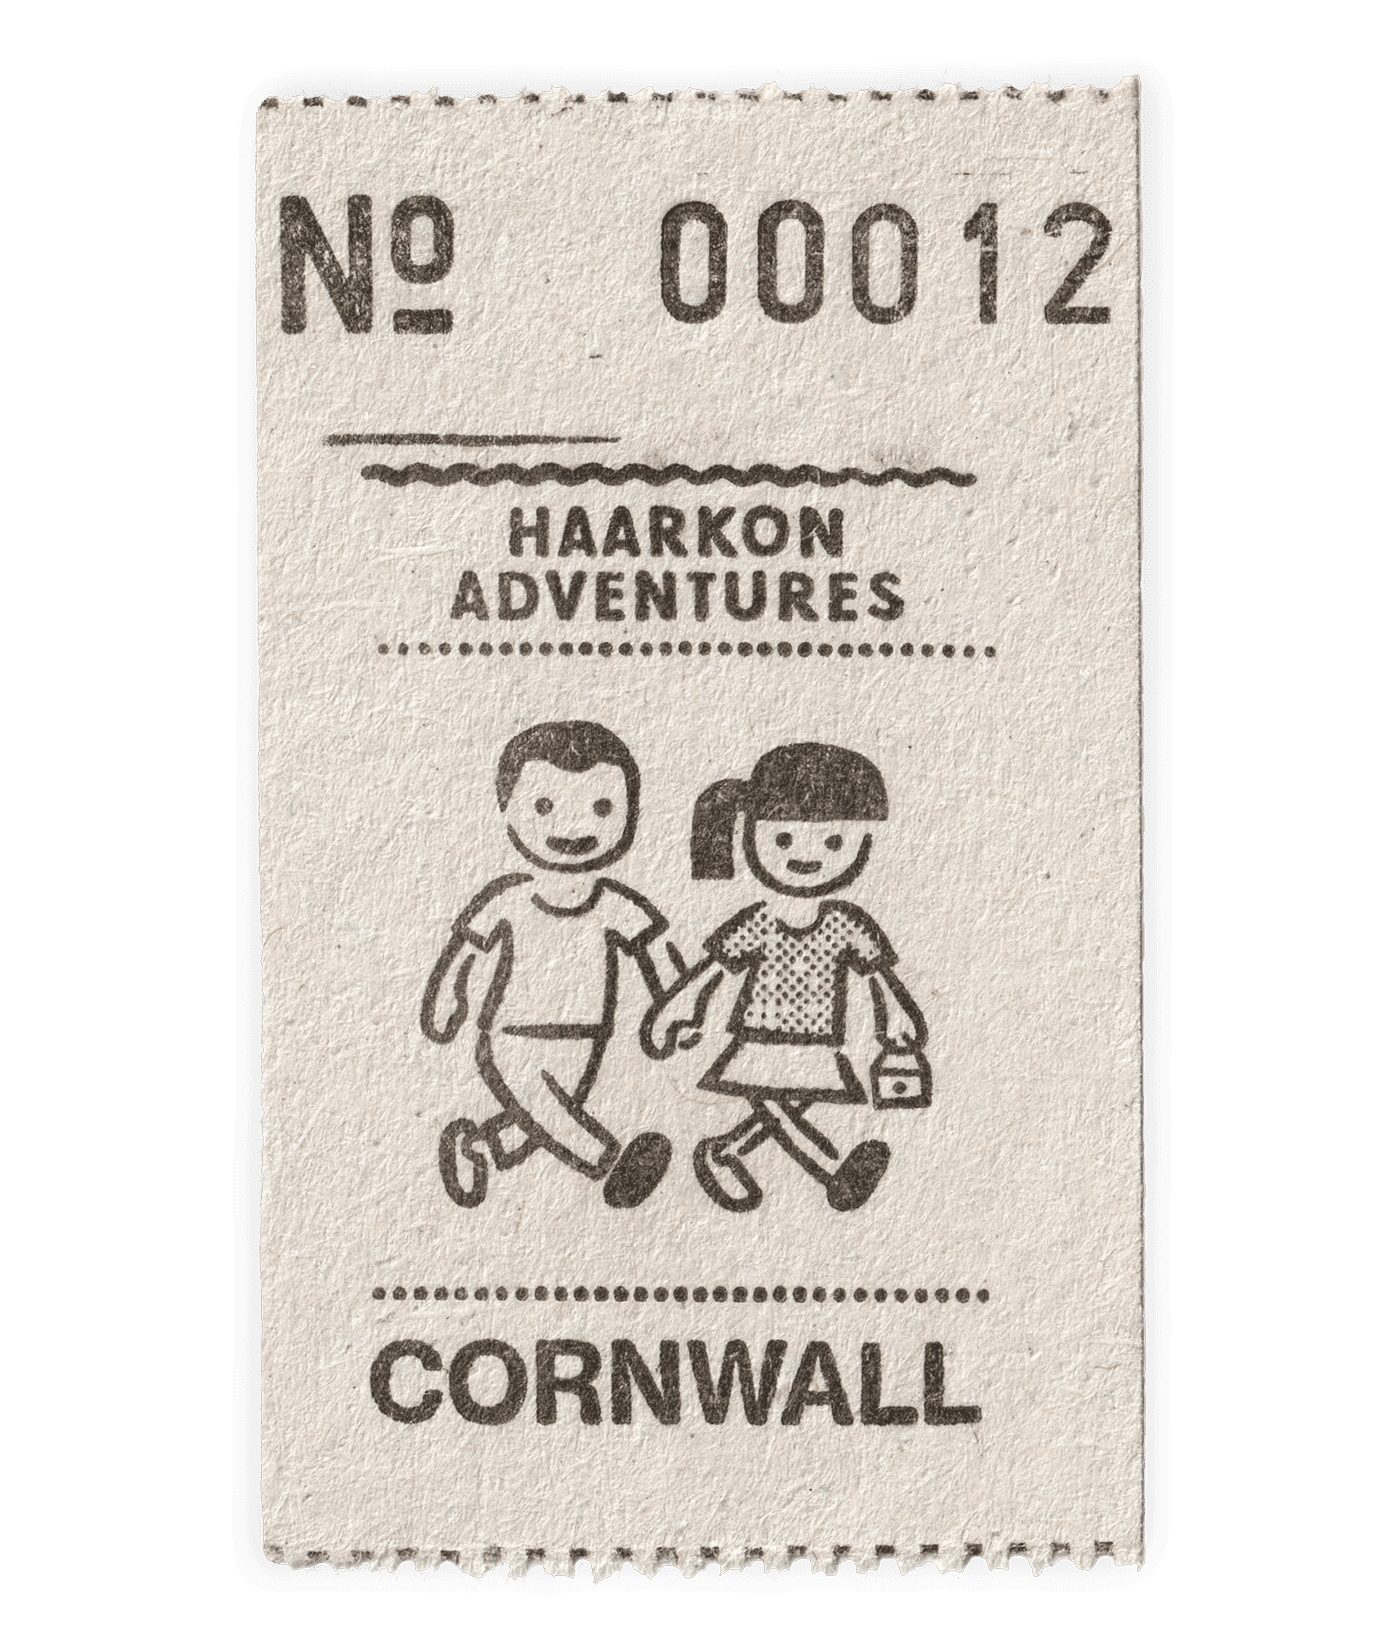 Haarkon Adventures Cornwall ticket